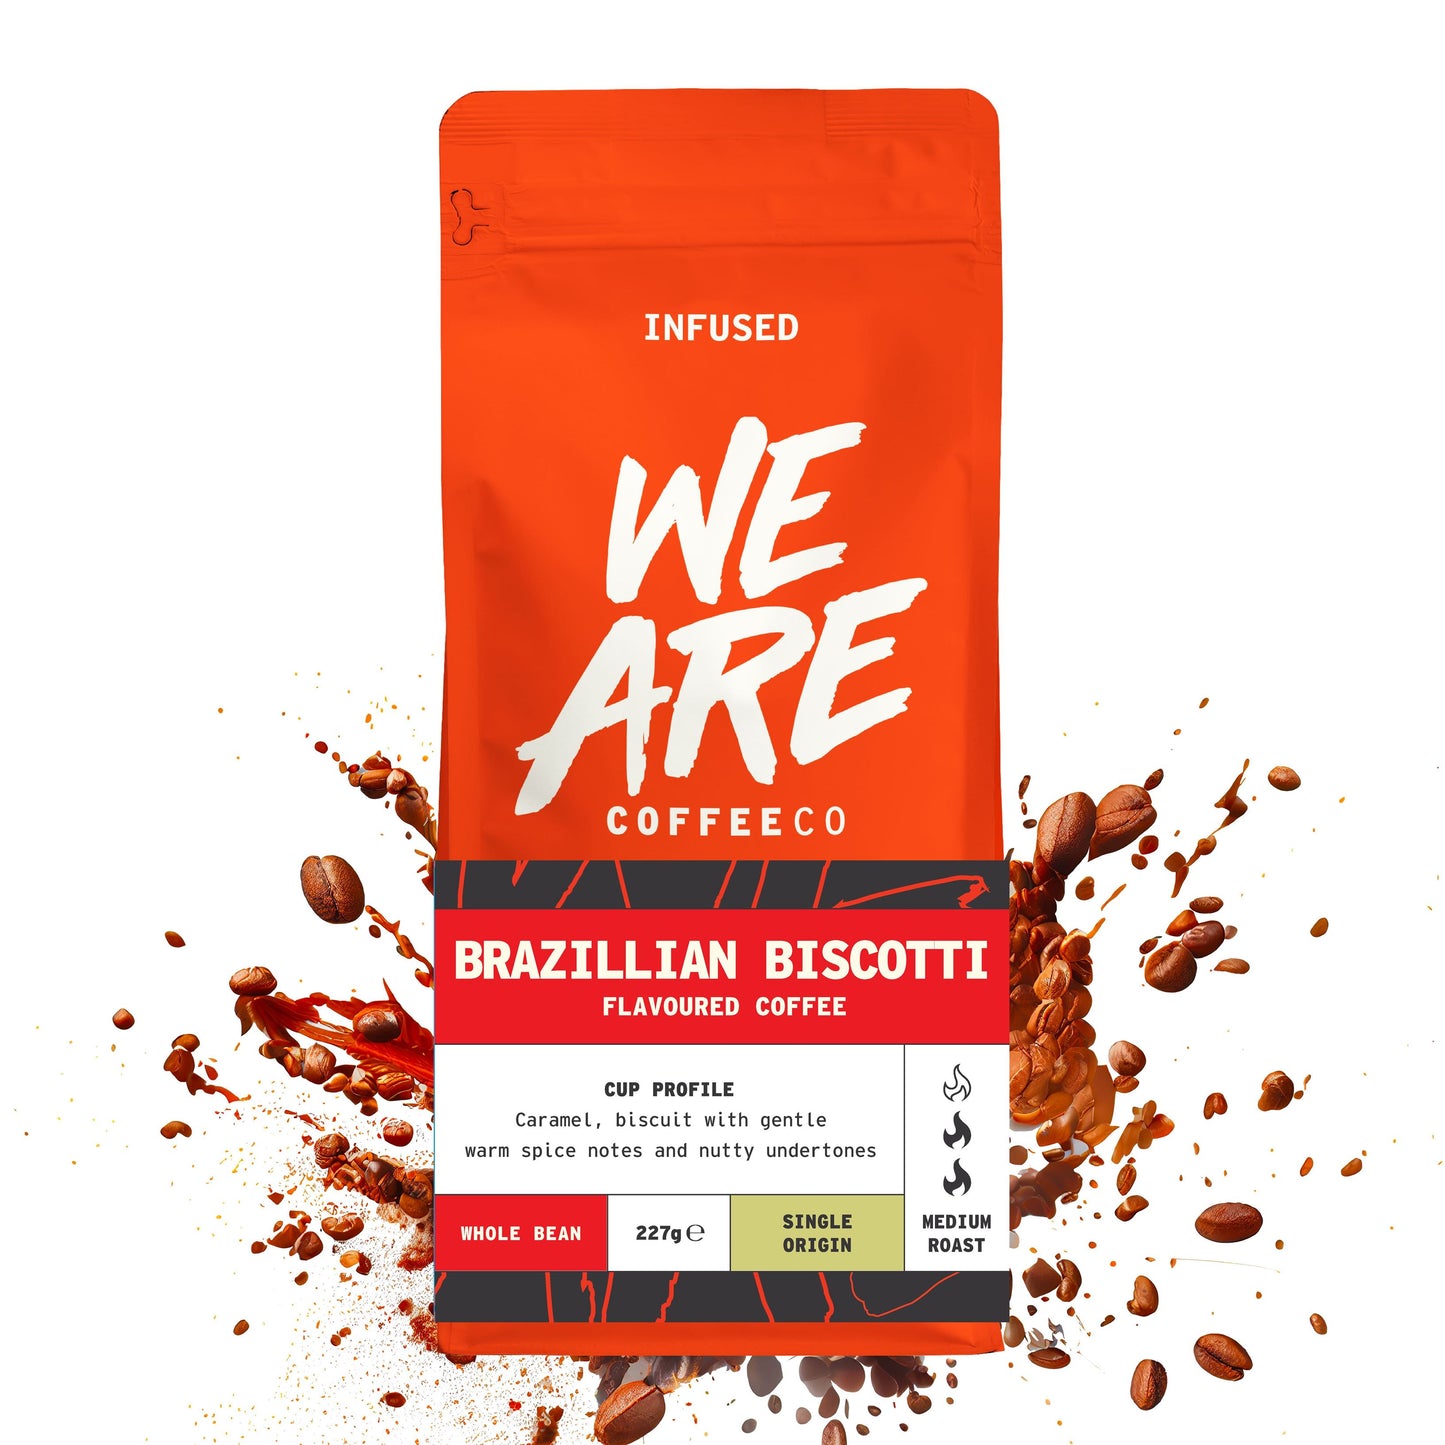 Brazilian Biscotti Flavoured Coffee